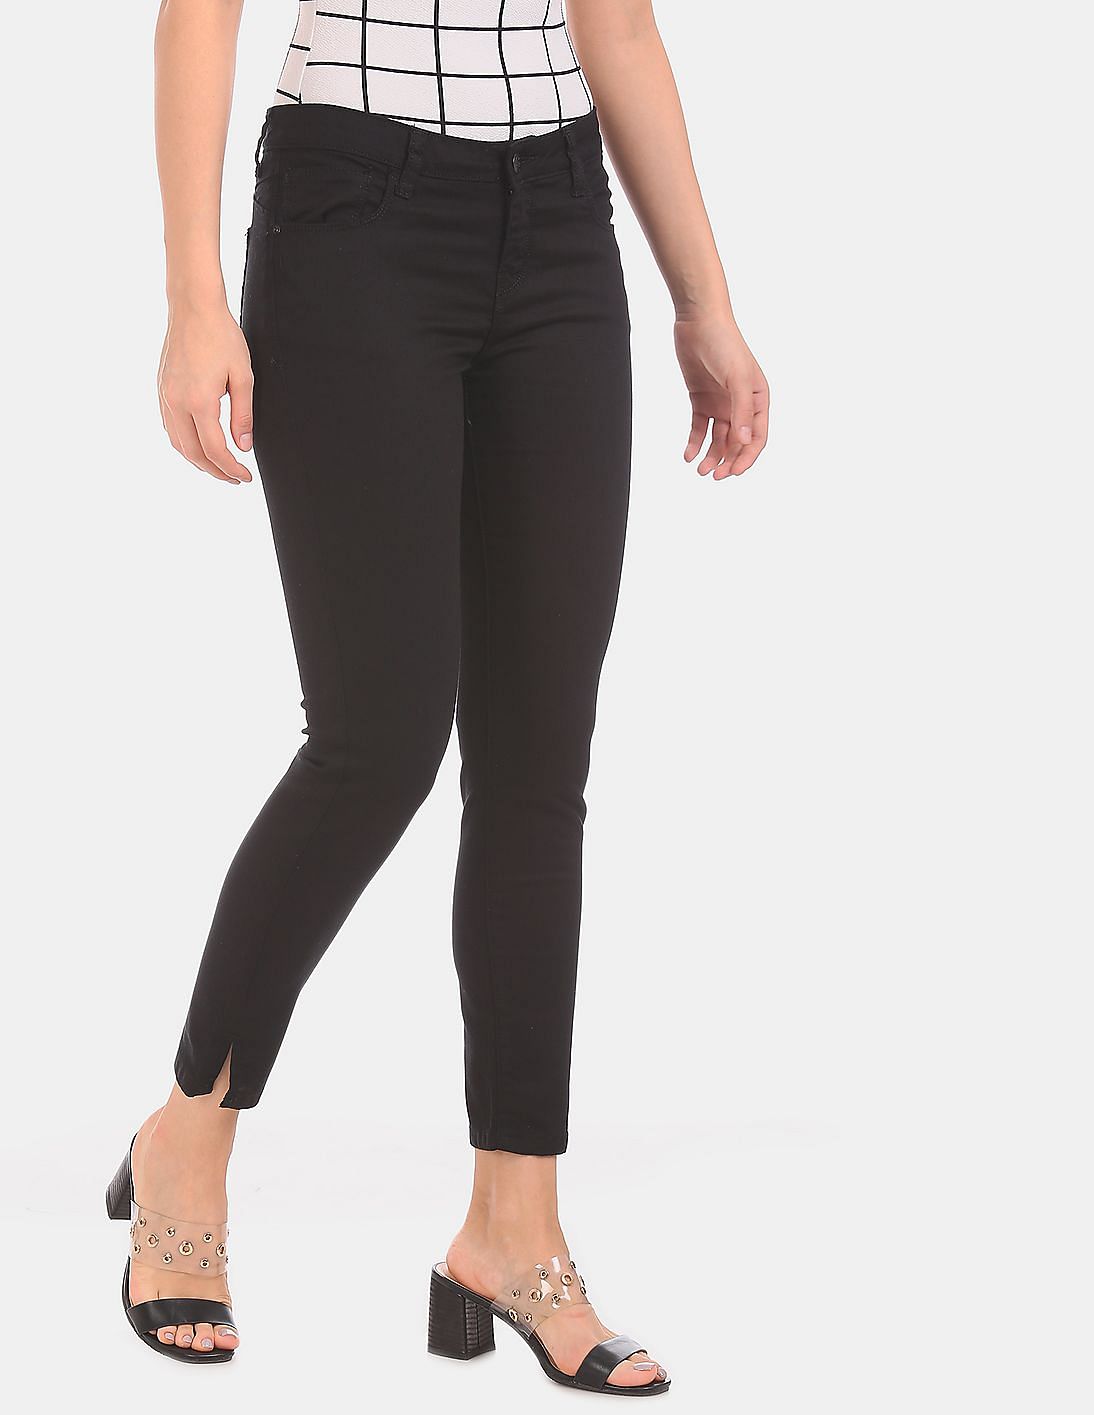 black slim jeans womens